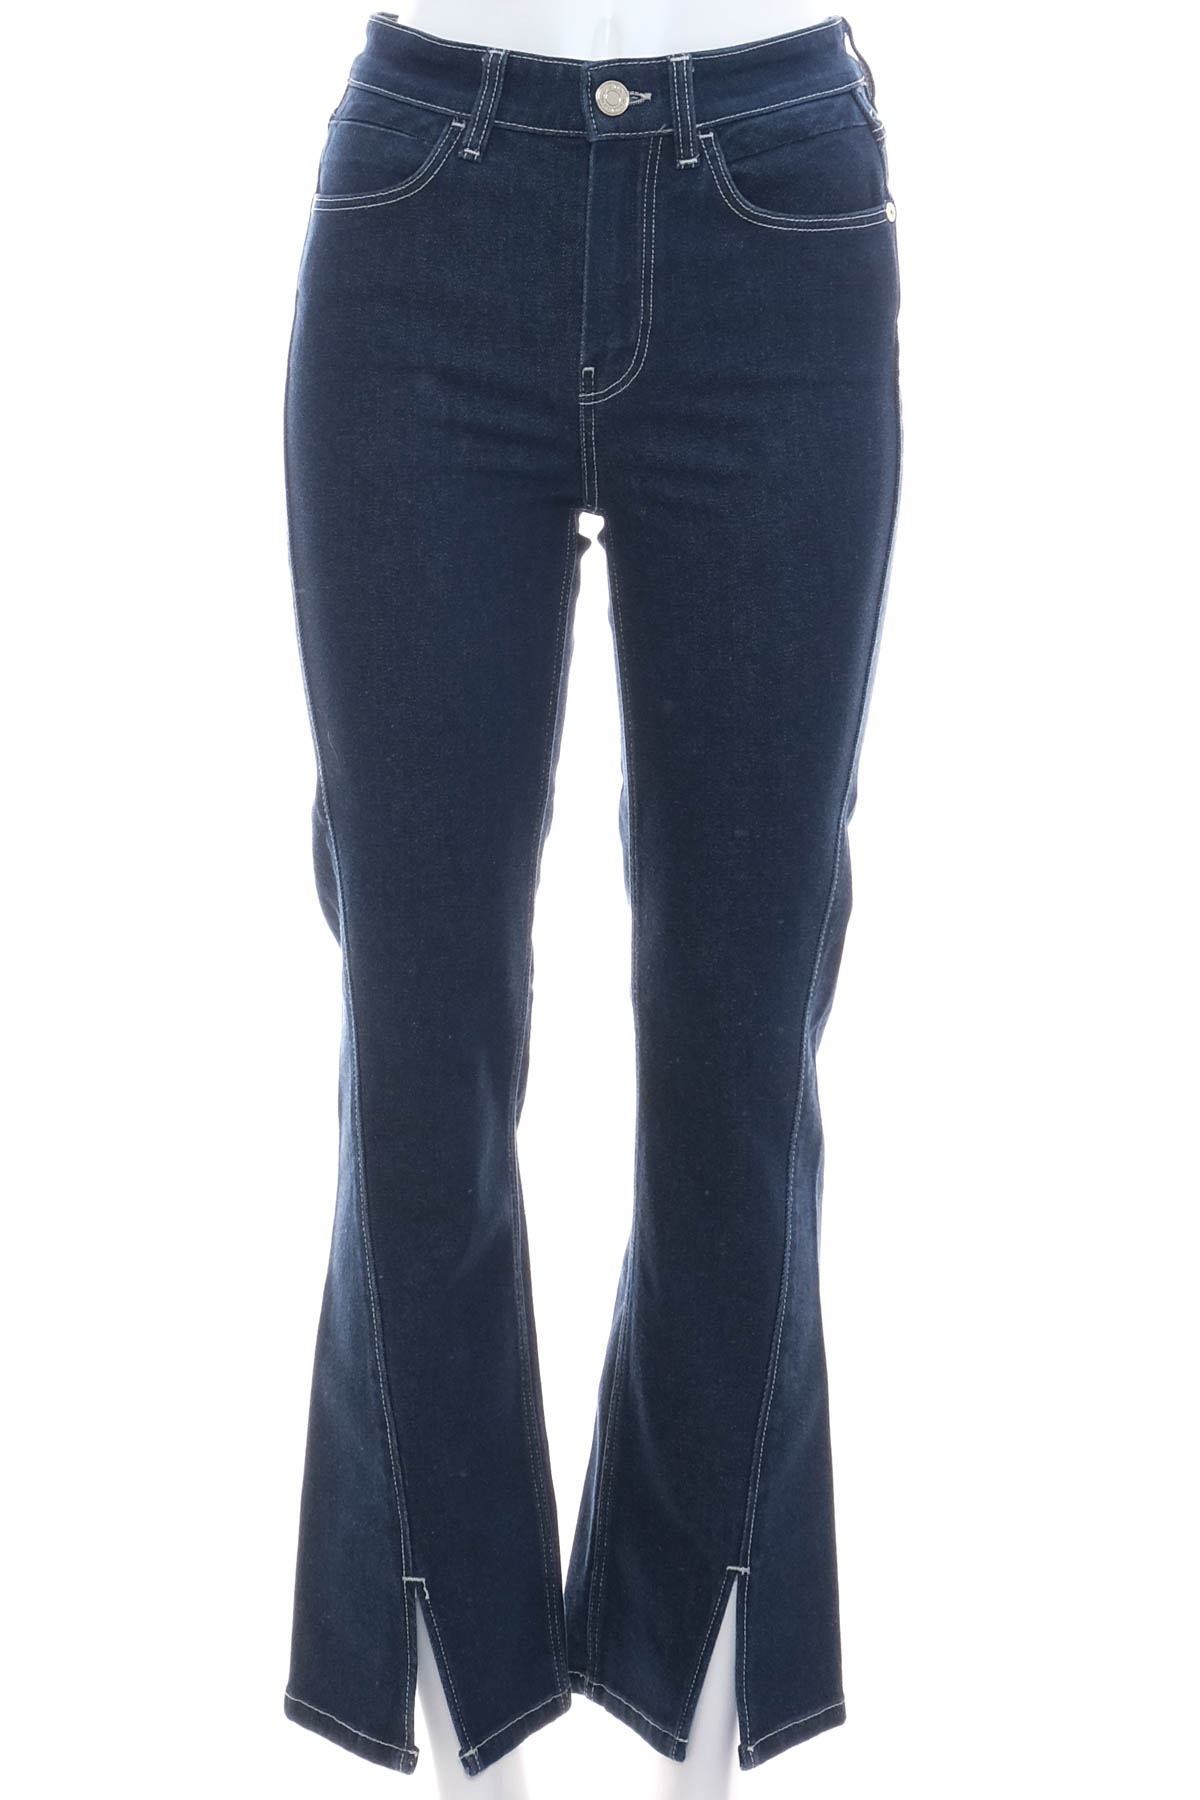 Women's jeans - Massimo Dutti - 0